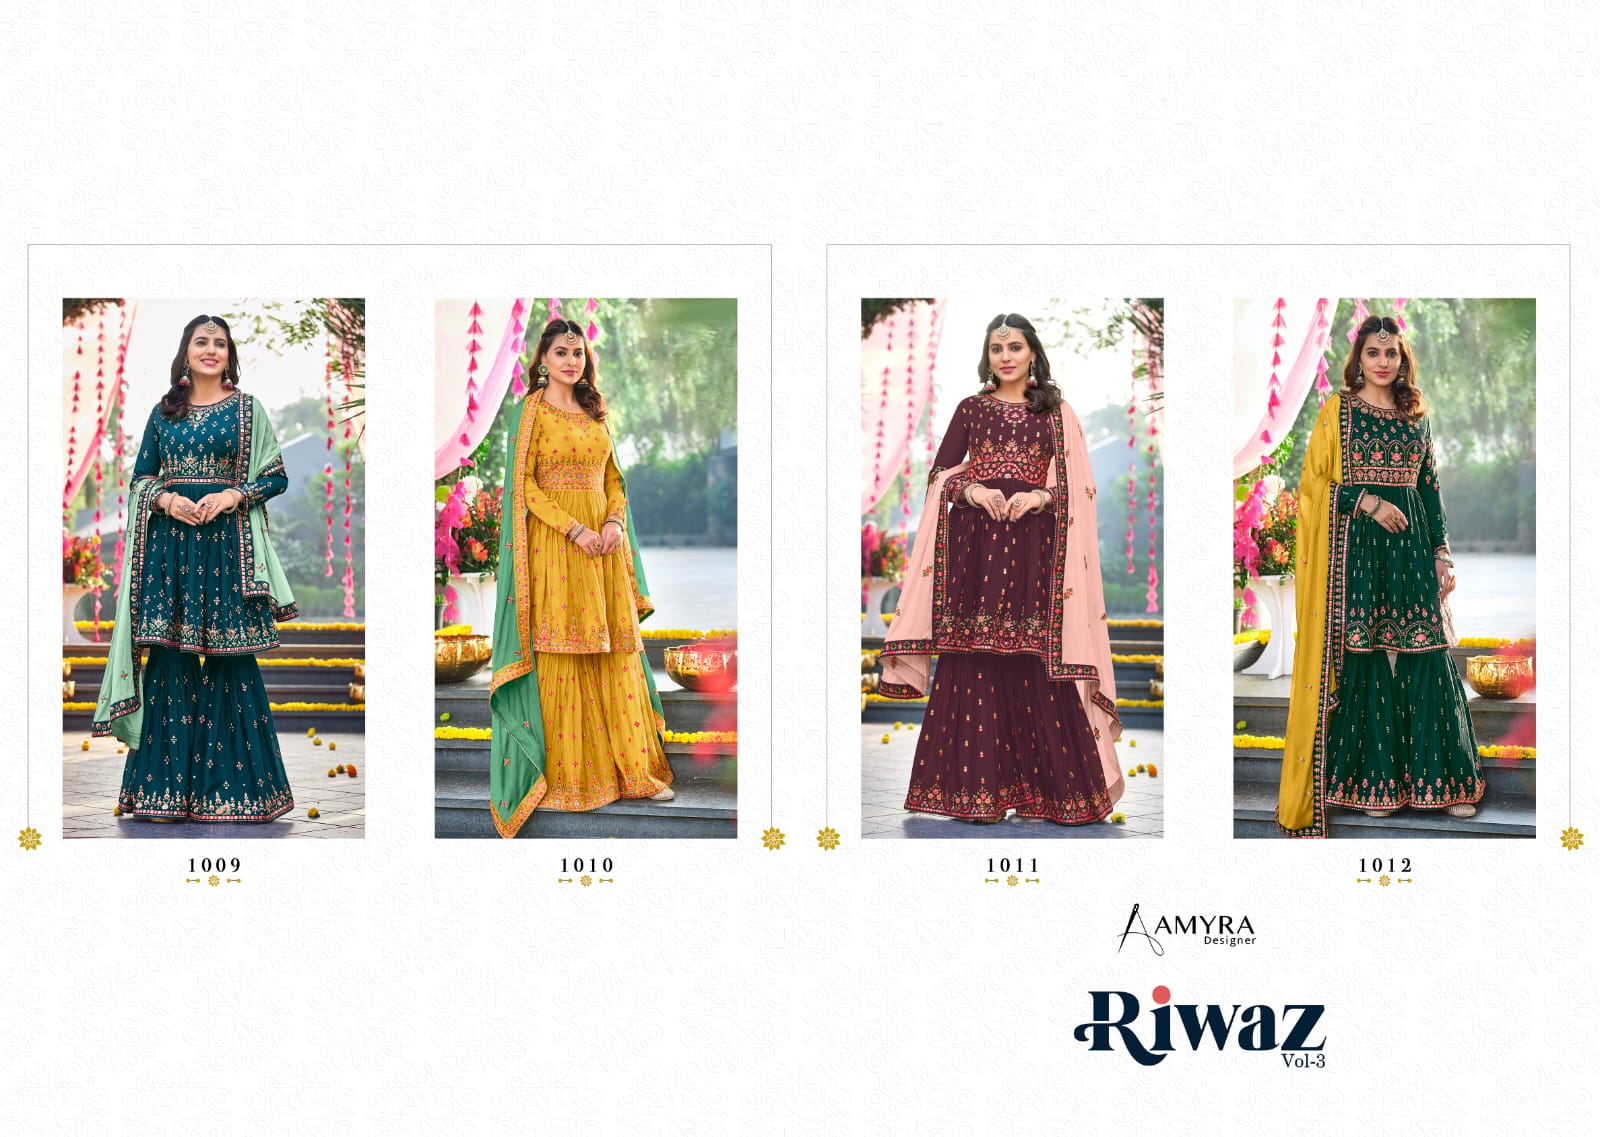 Amyra Riwaz 3 collection 3